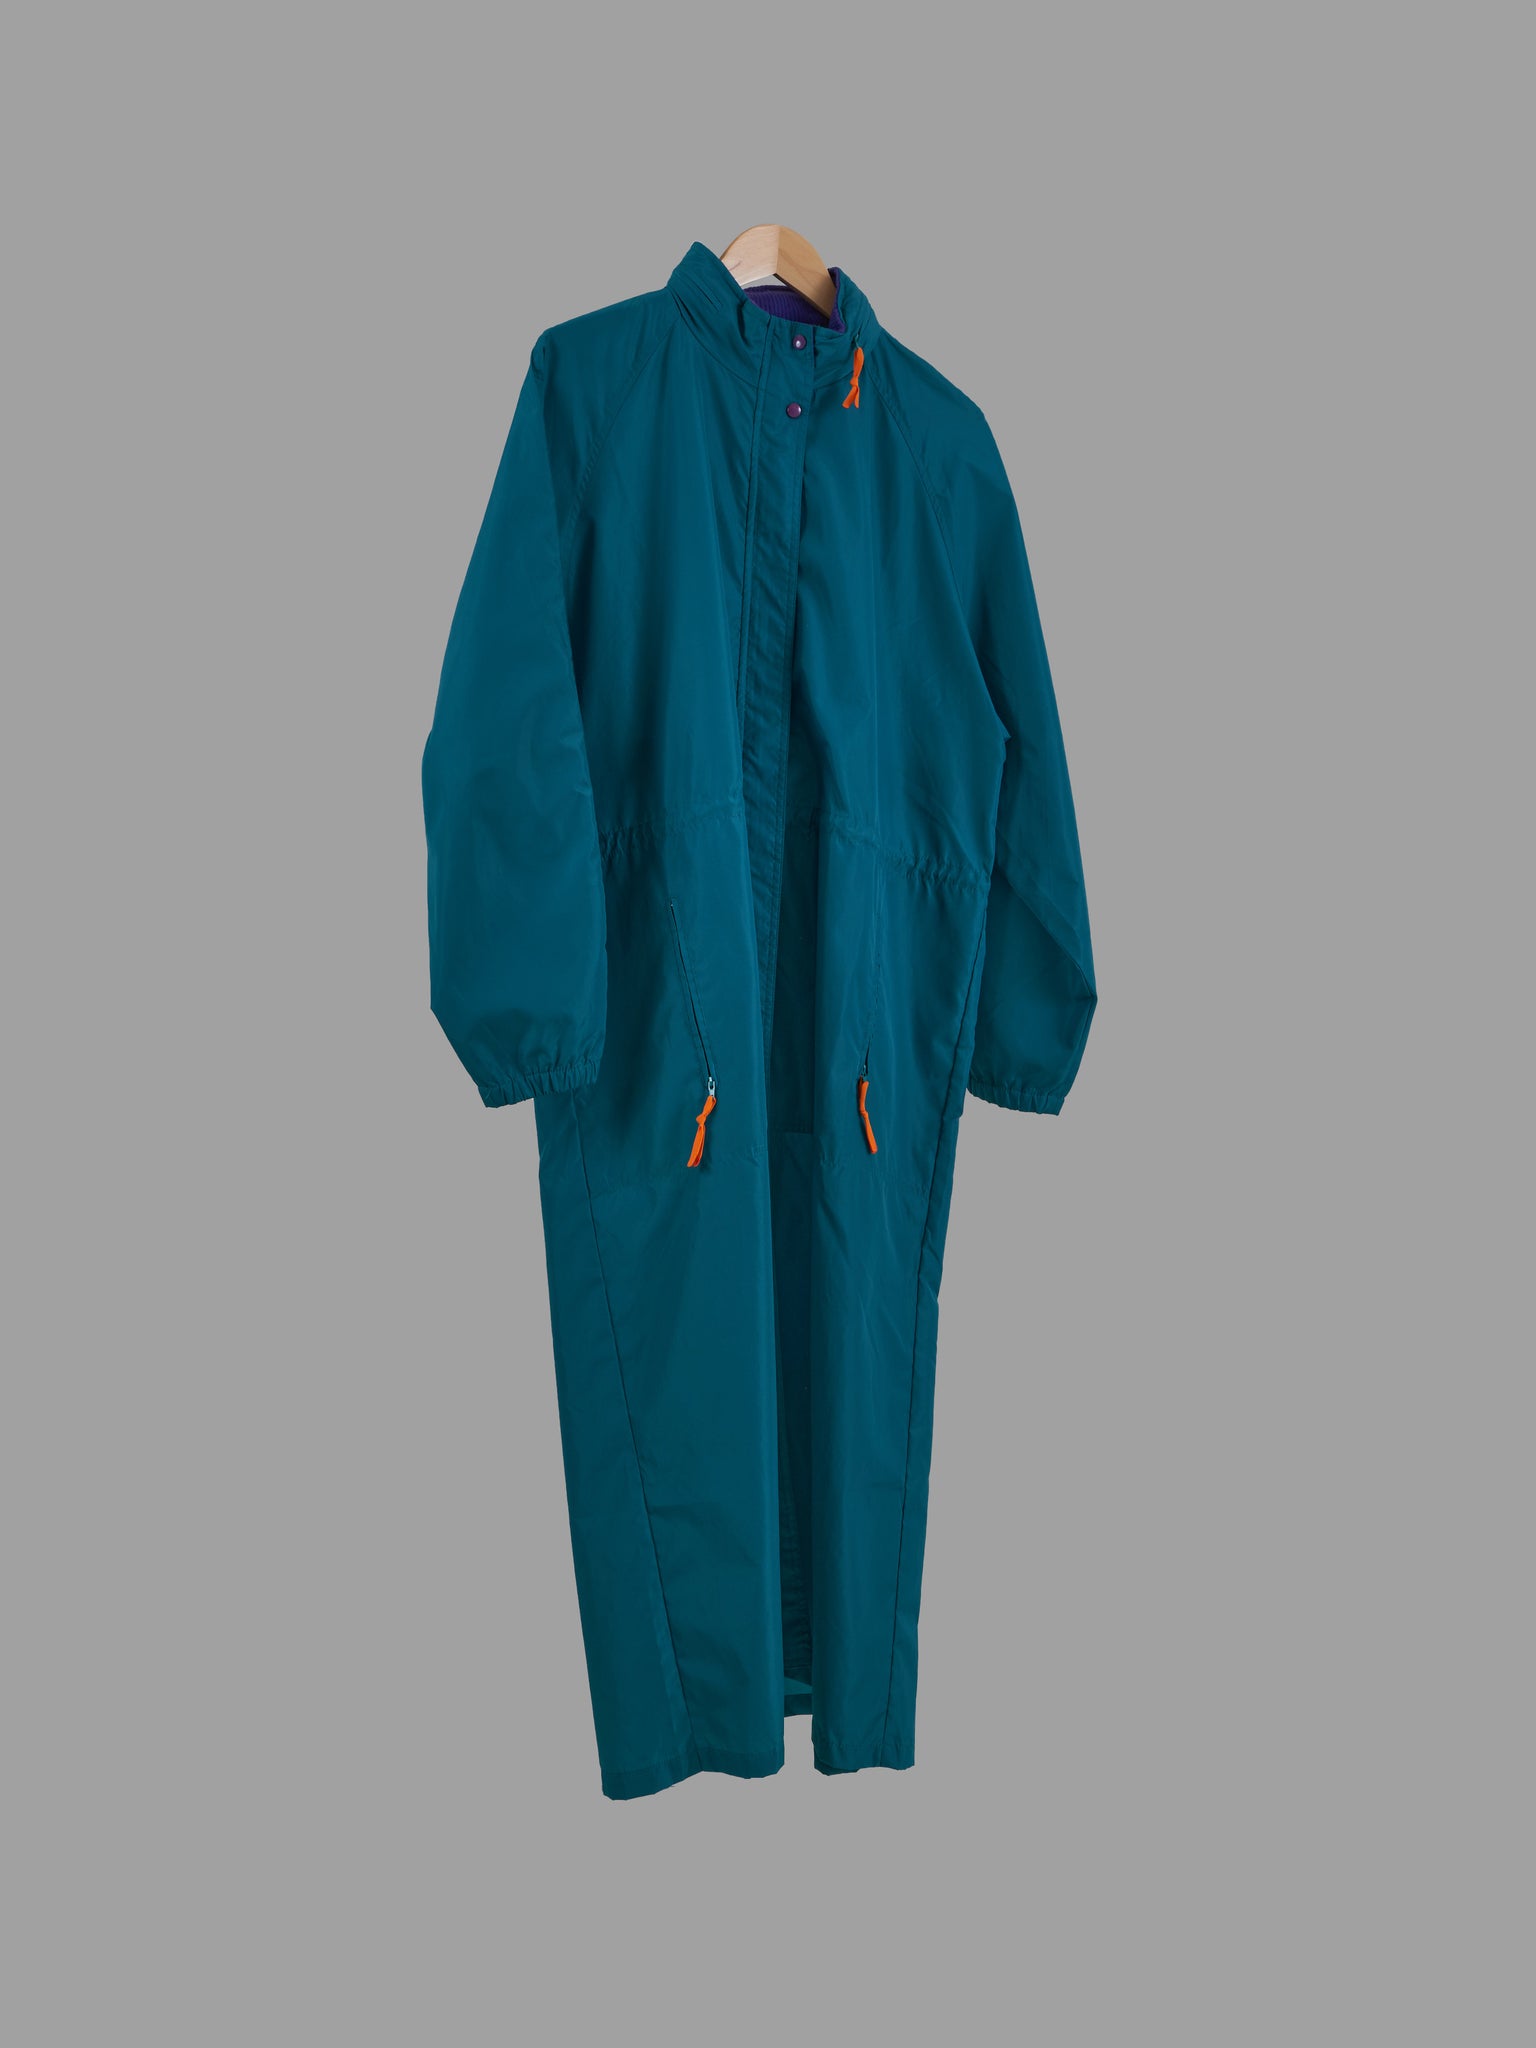 Woolrich Woman 1990s aqua green nylon extra long purple trim raincoat - size L